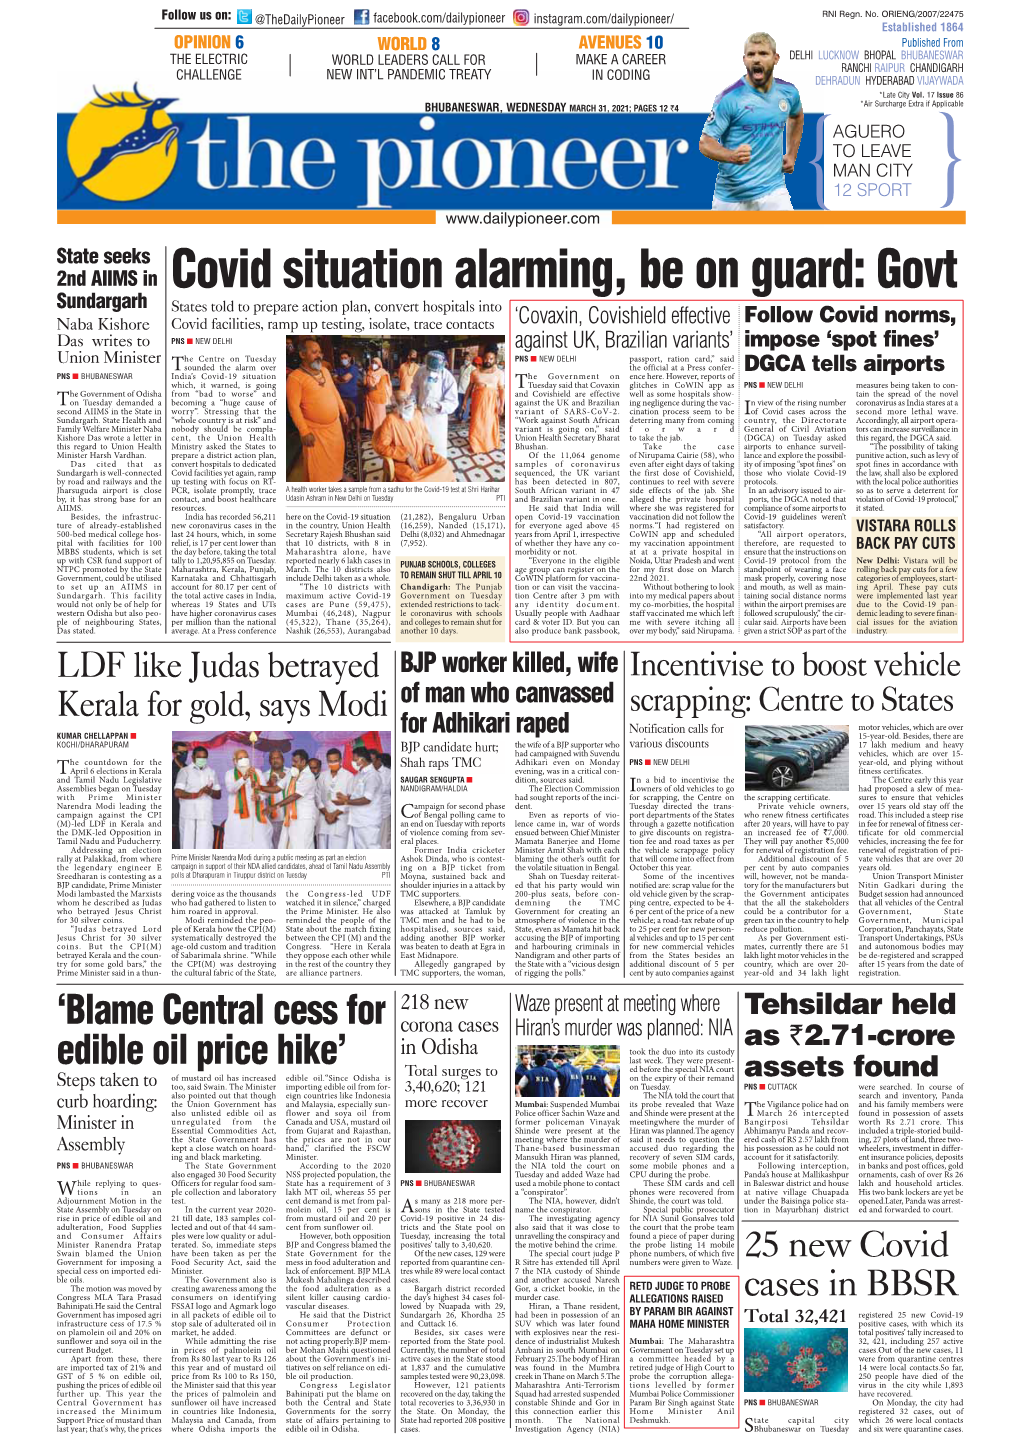 Bhubaneswar on Tuesday and Six Were Quarantine Cases